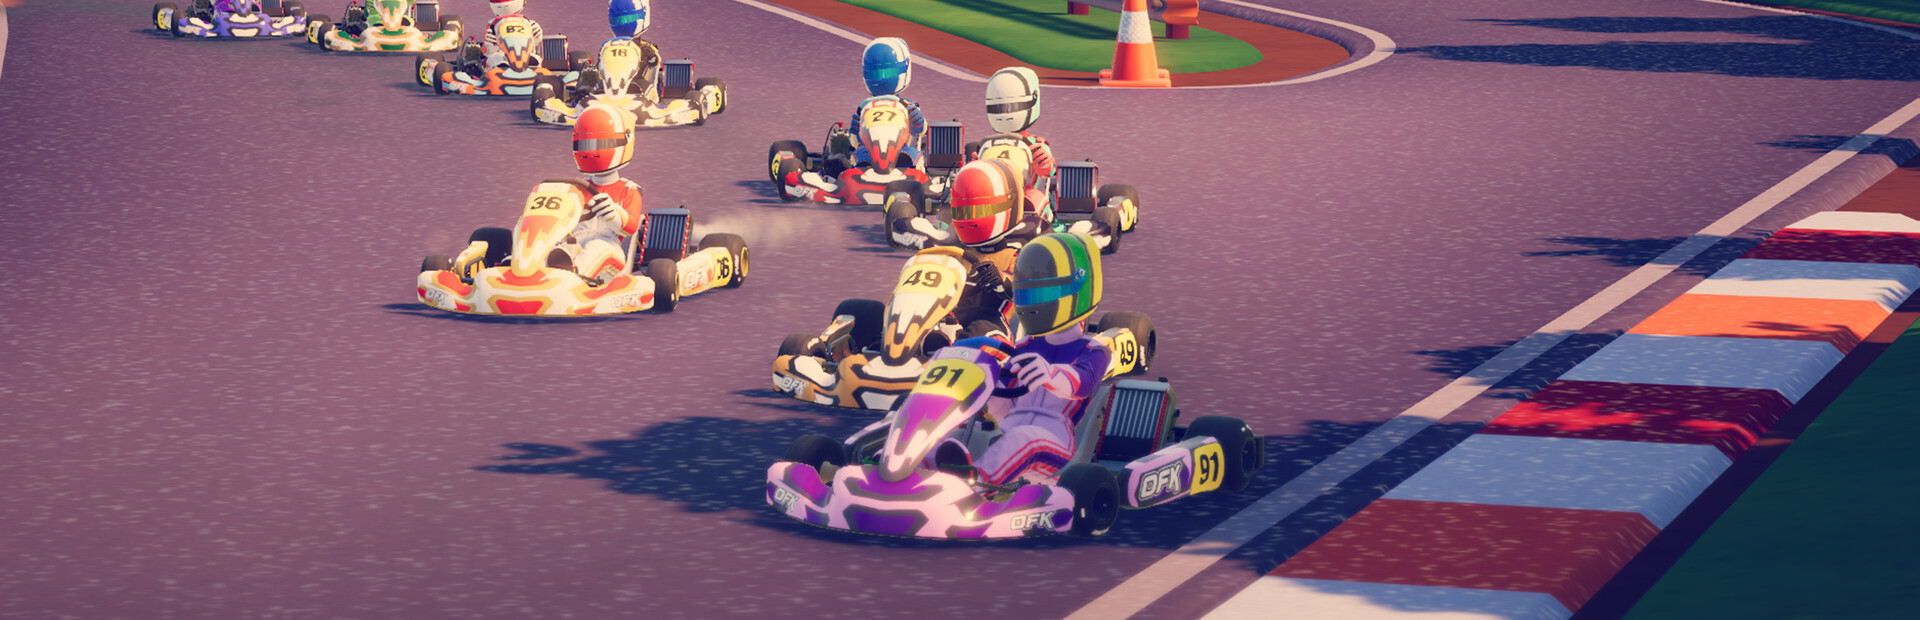 Karting Superstars cover image